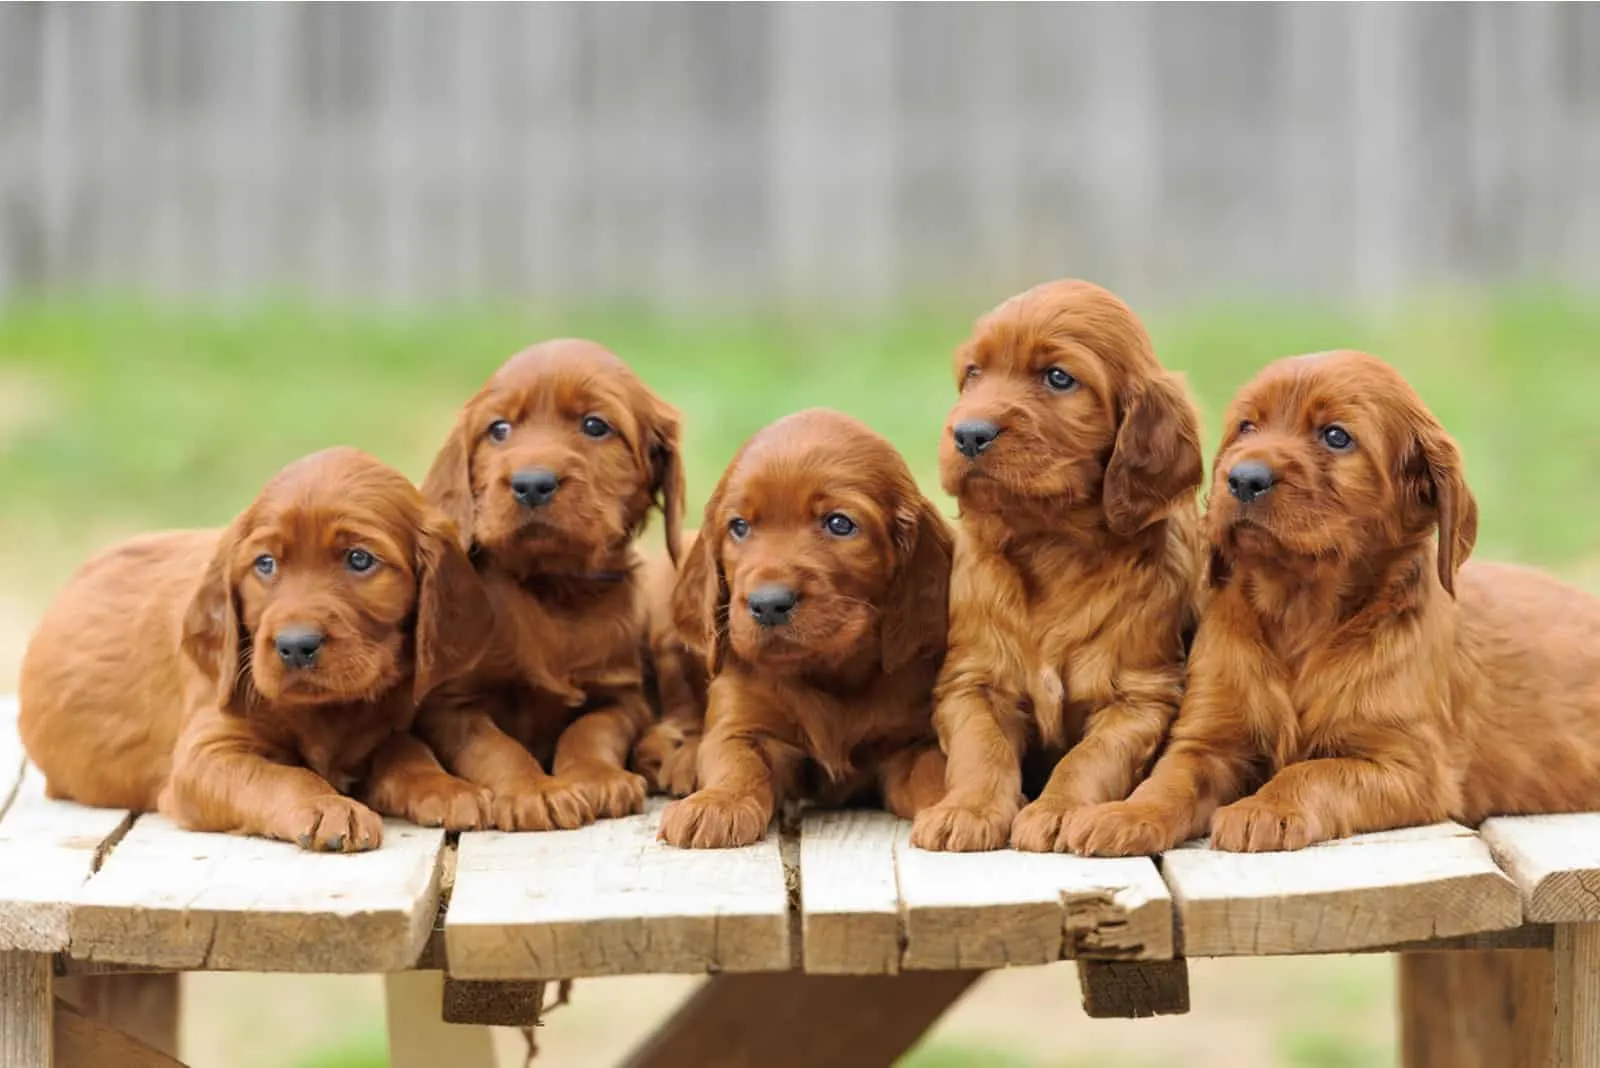 Irish Setter puppies